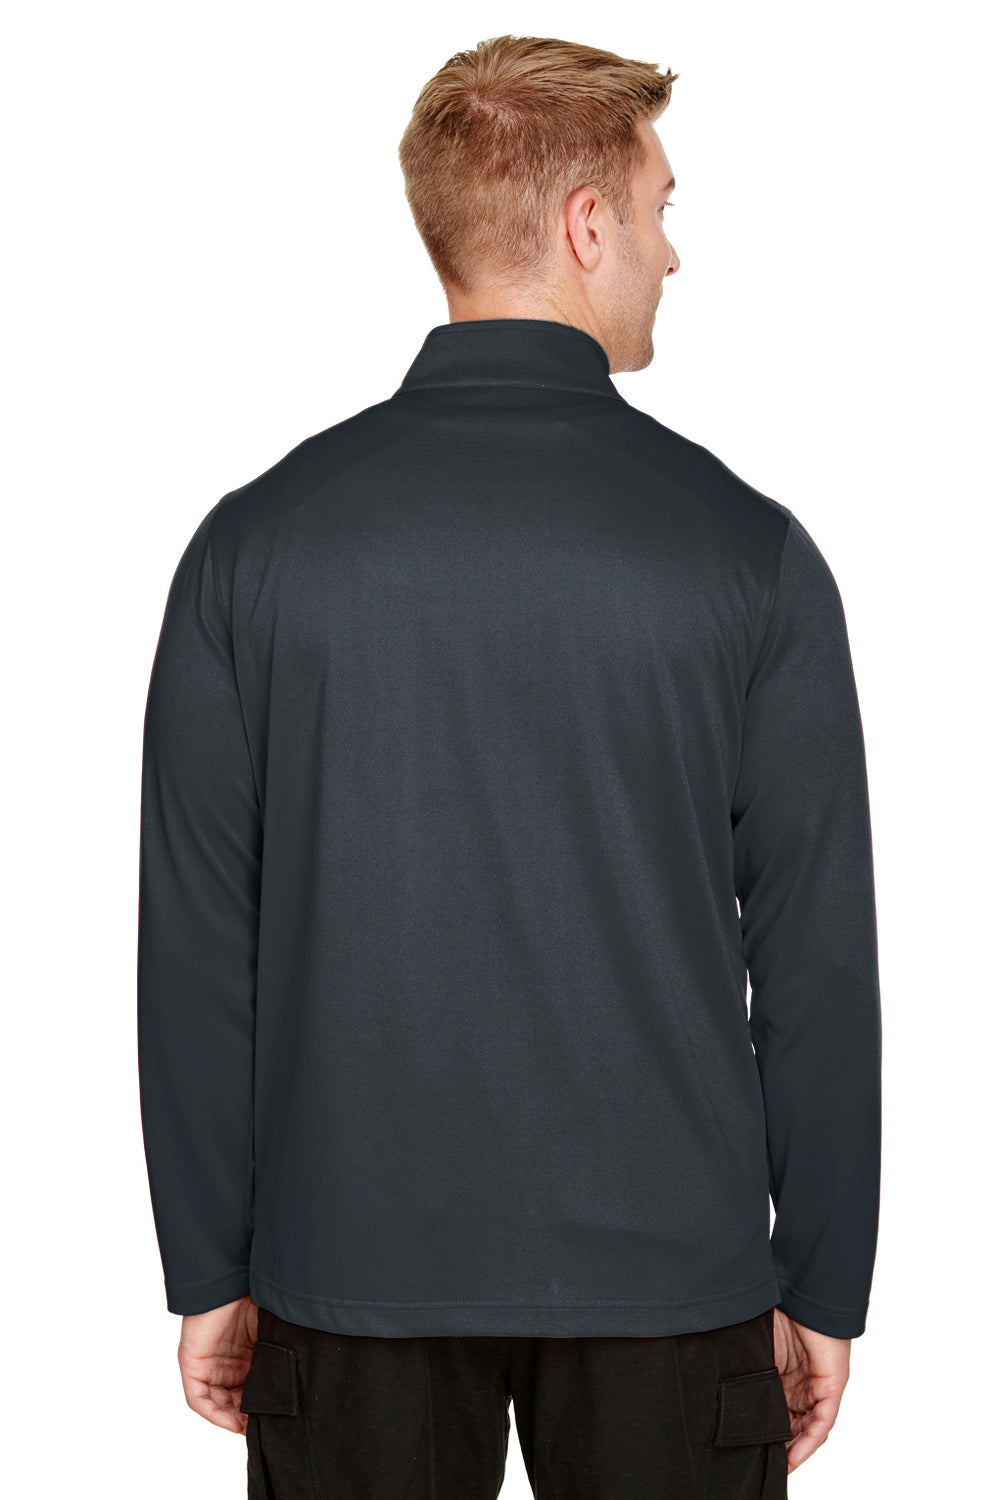 Harriton M748 Mens Advantage Performance Moisture Wicking 1/4 Zip Sweatshirt Charcoal Grey Back